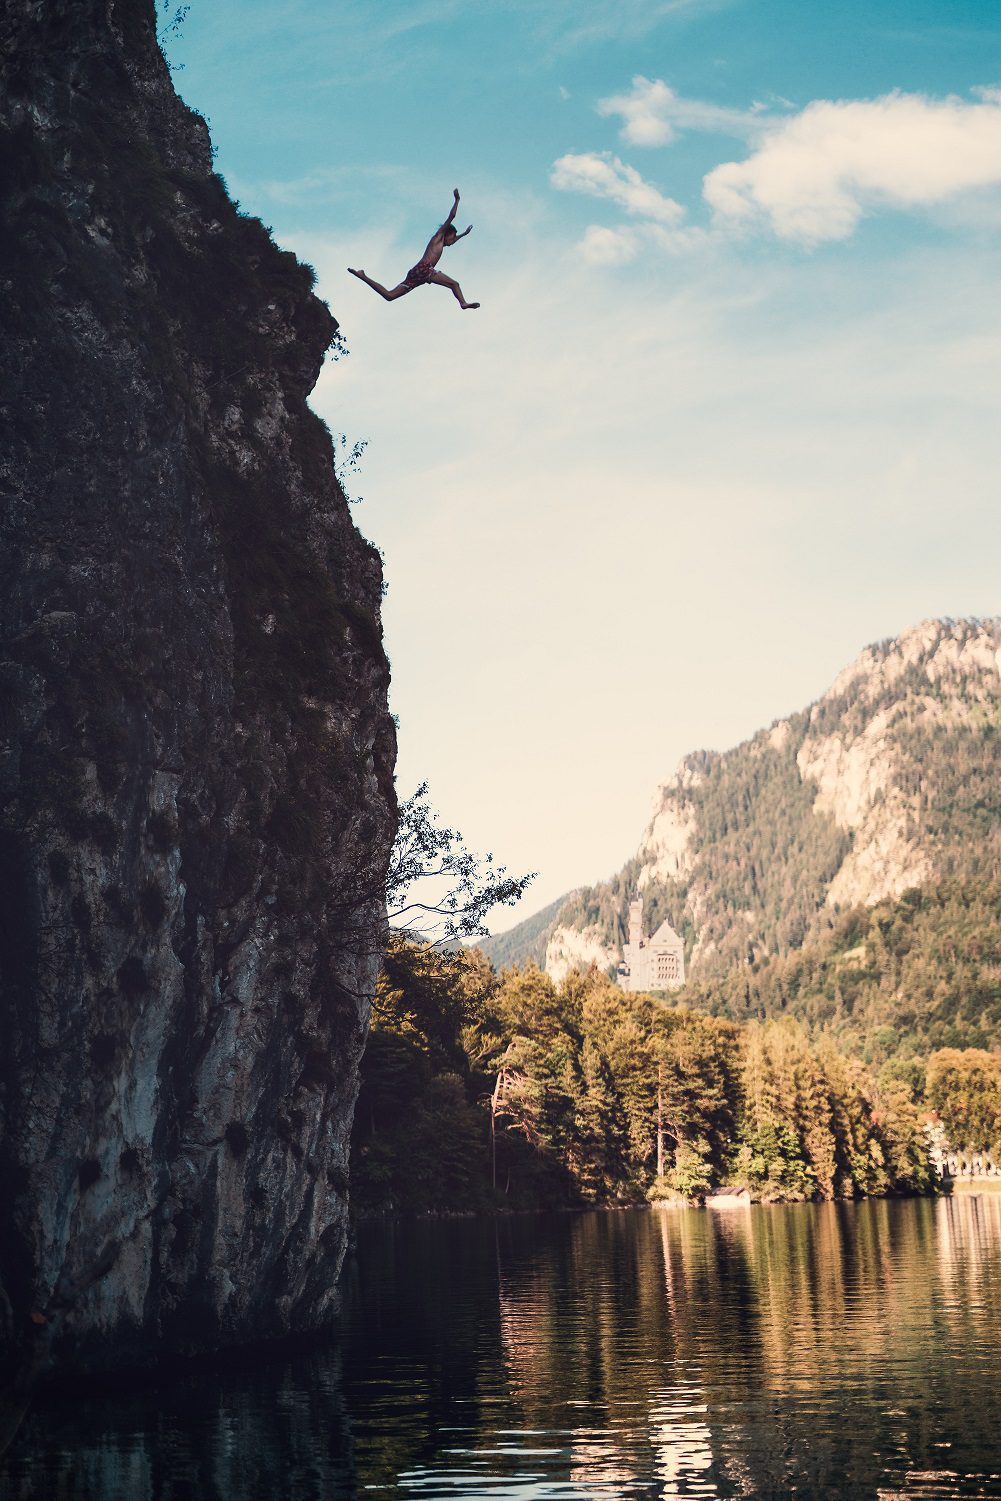 Man jumping off sheer cliff